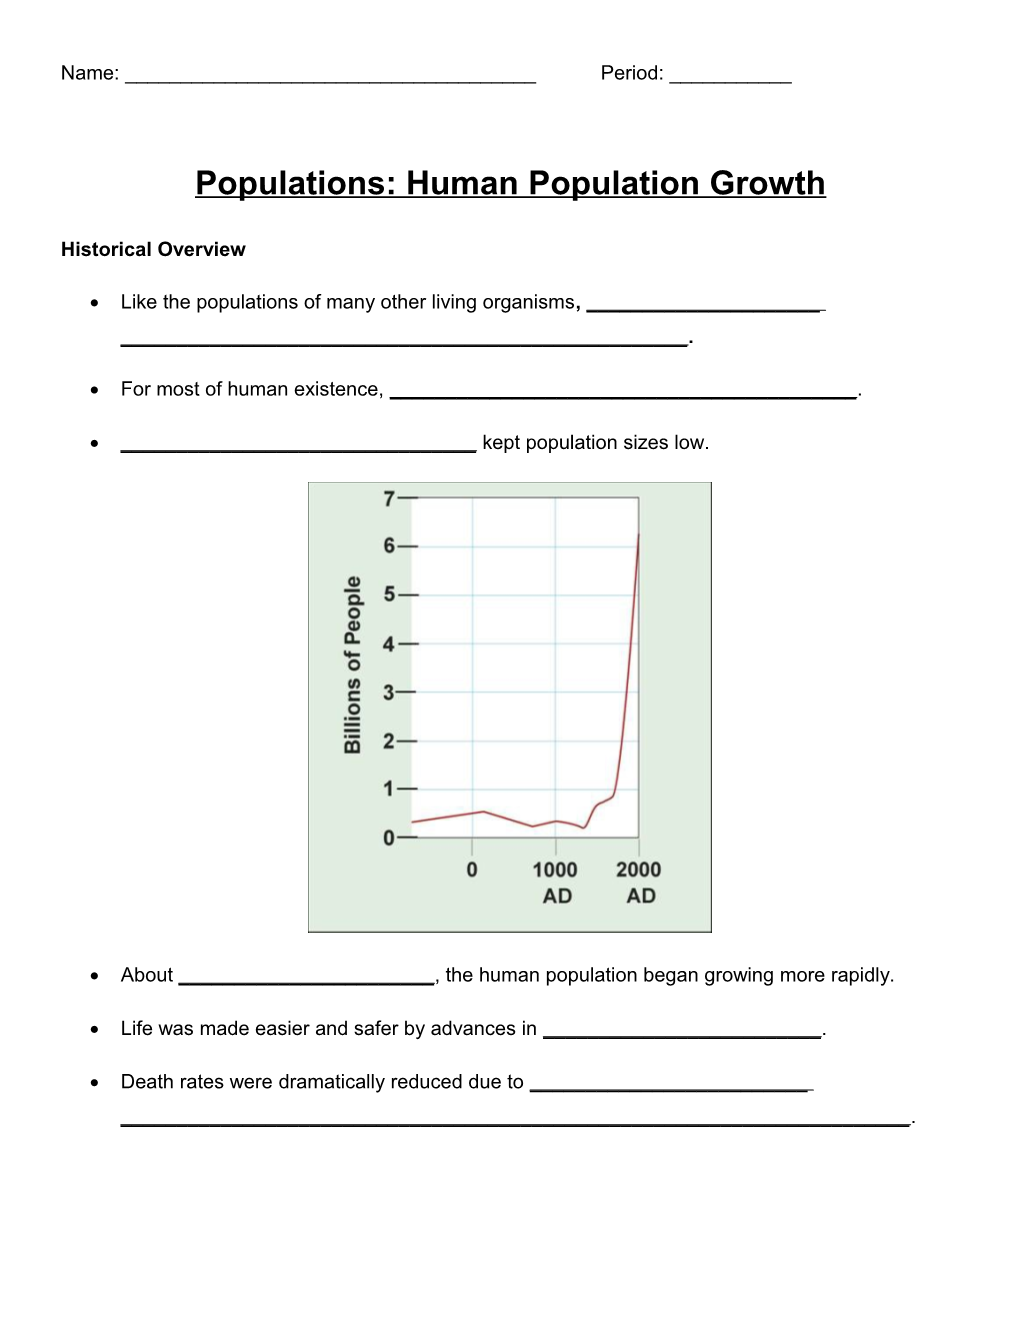 Populations: Human Population Growth